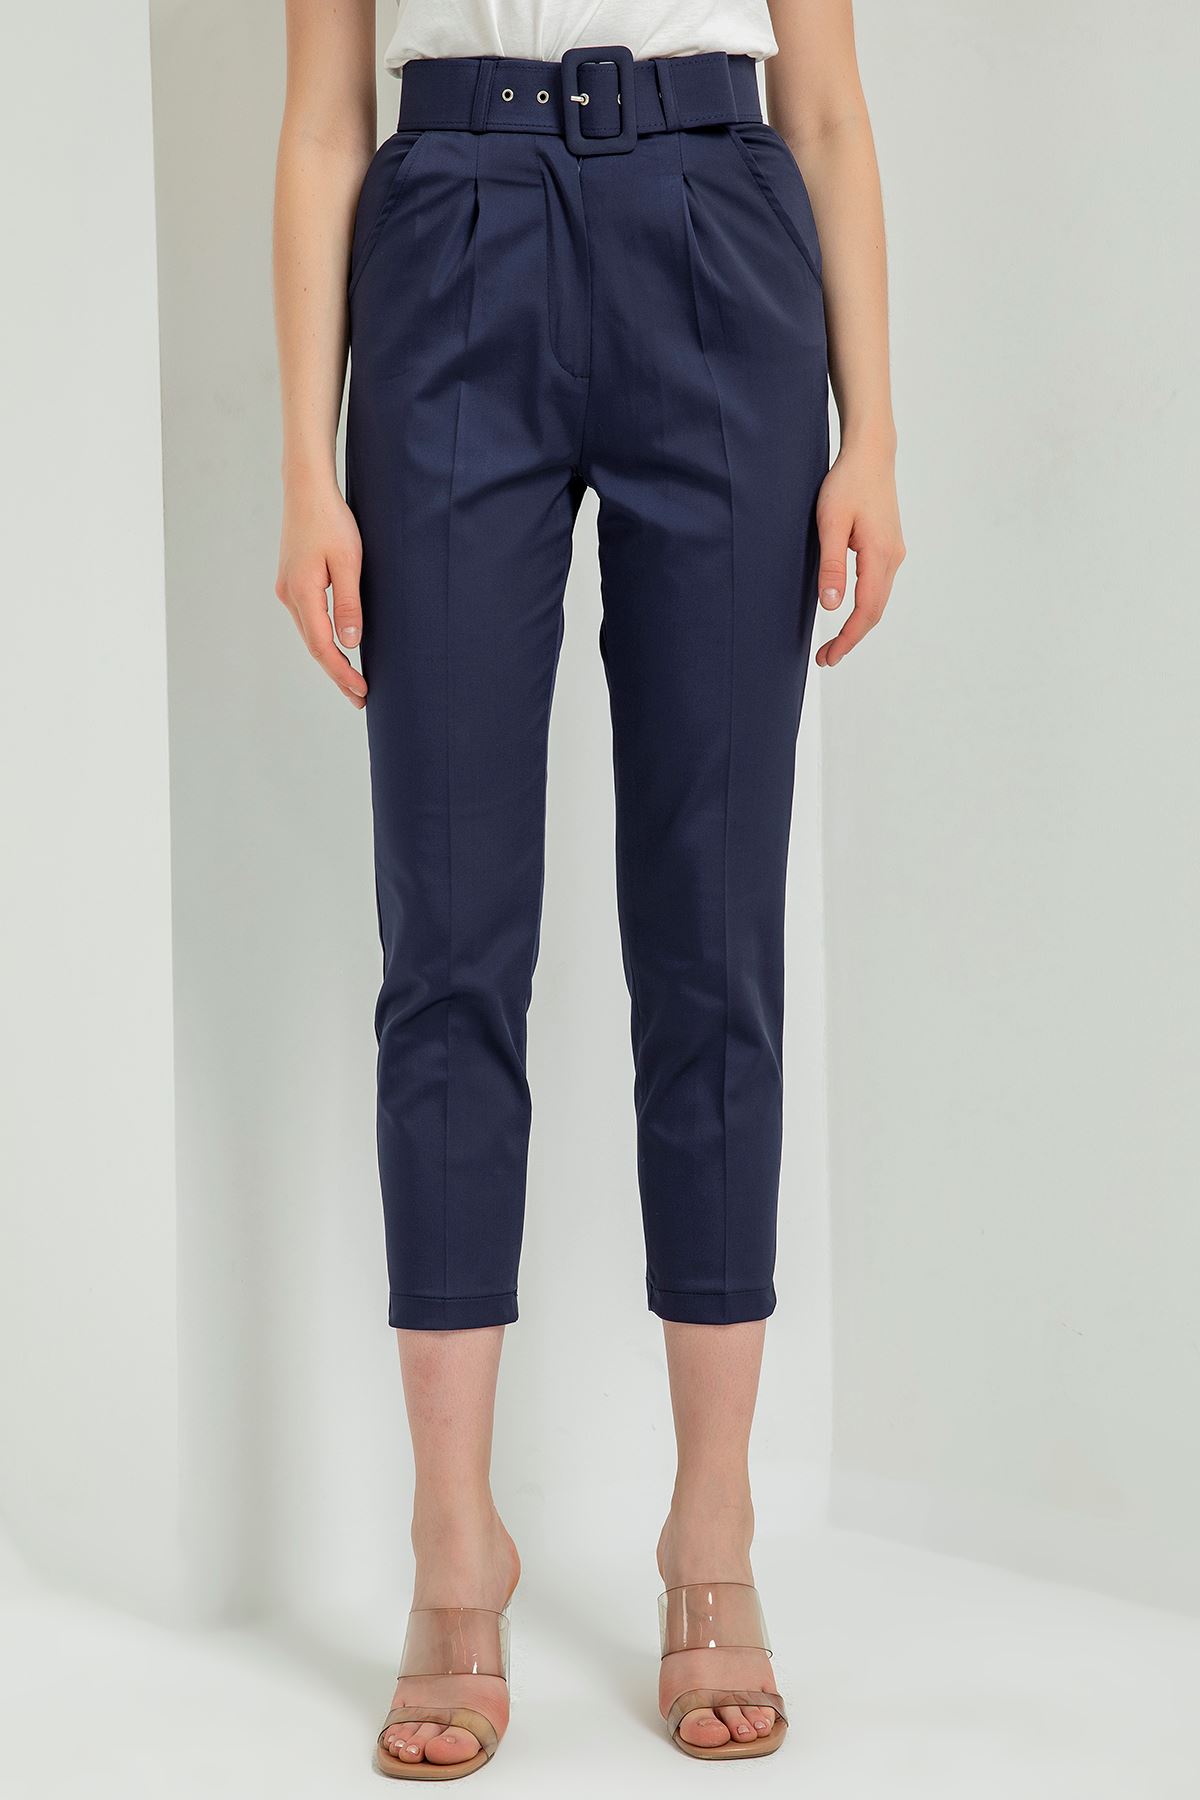 Atlas Fabric 3/4 Short Belted Women'S Trouser - Navy Blue 